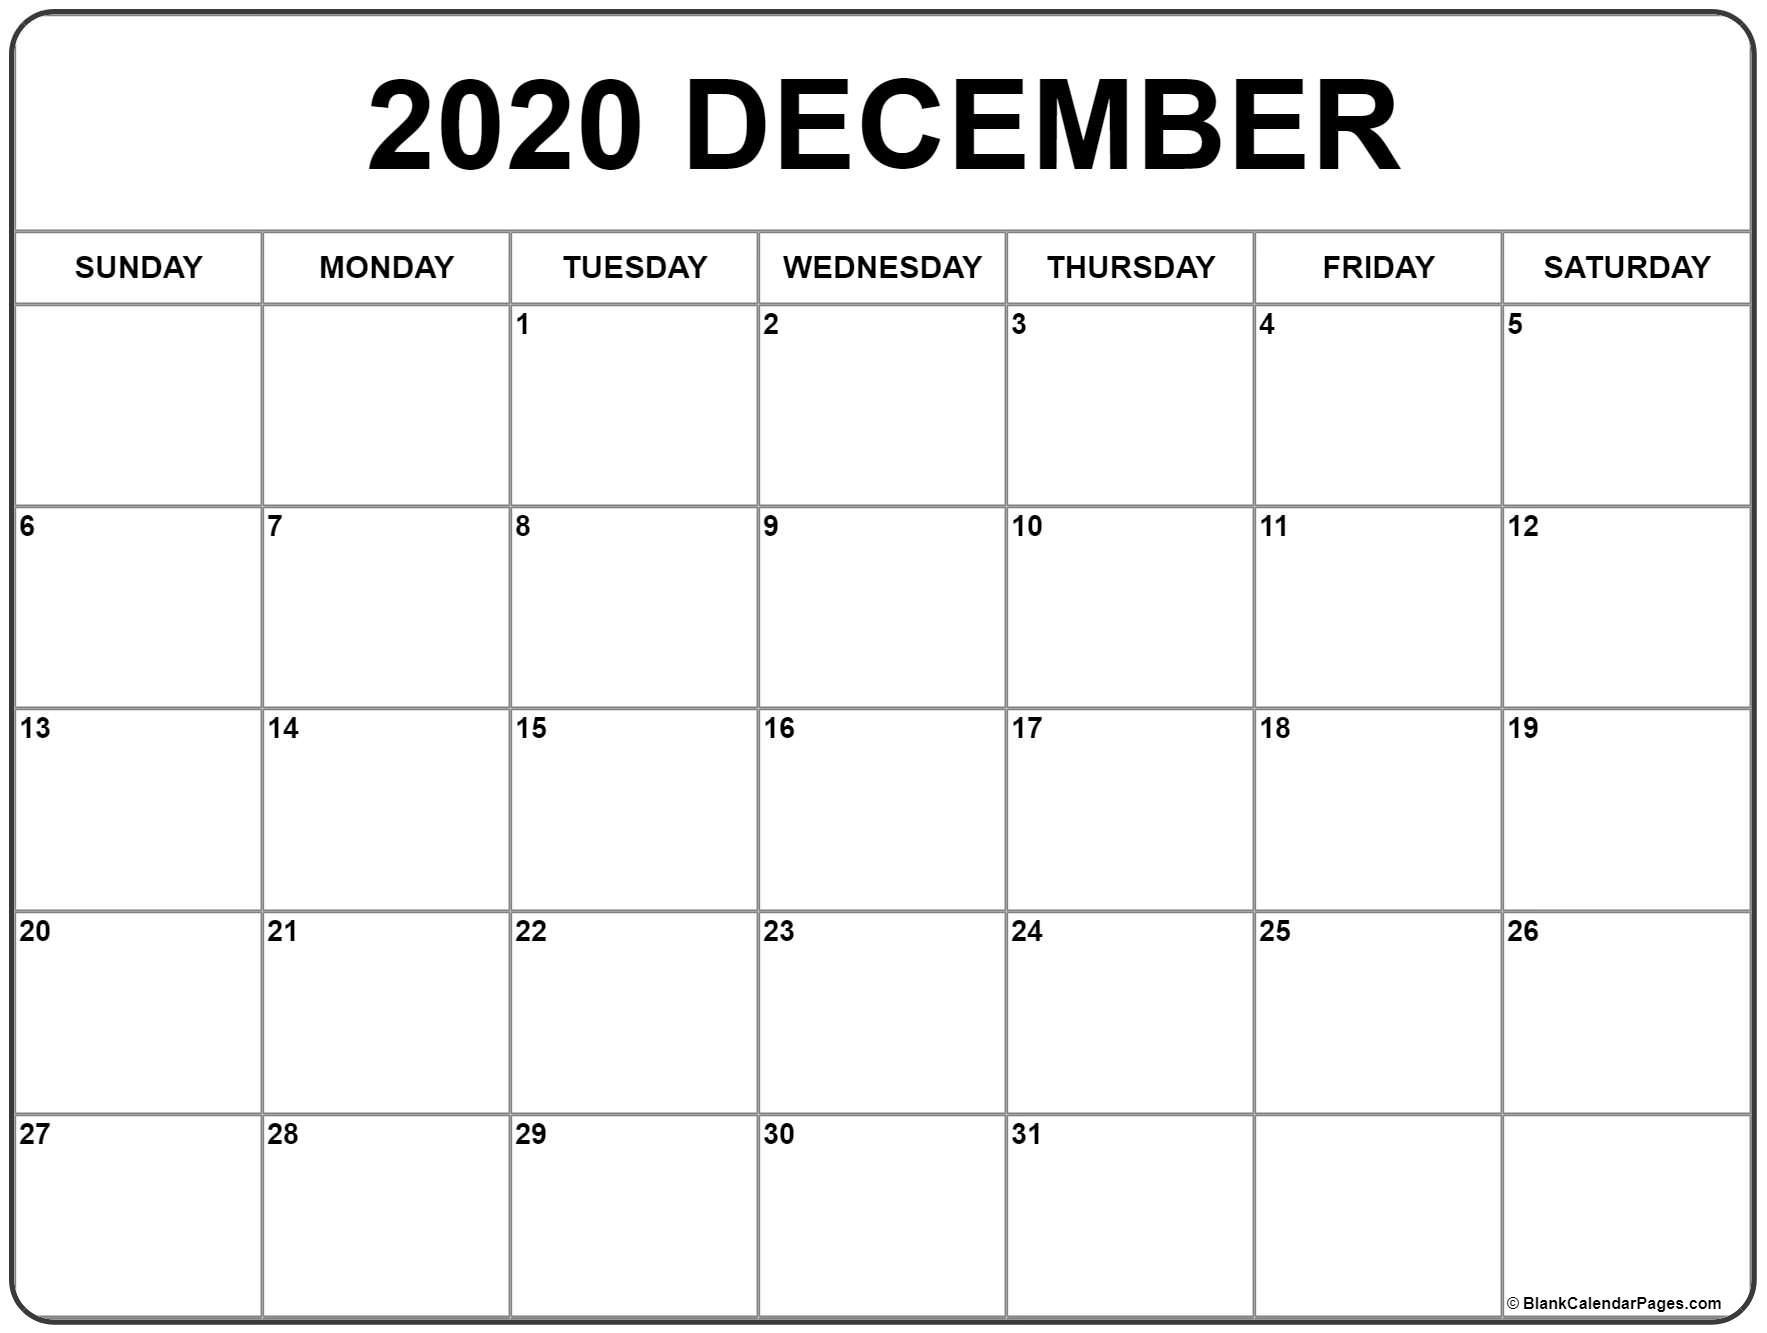 December 2020 Printable Calendar Template #2020Calendars-Blank 2020 Calendar Template